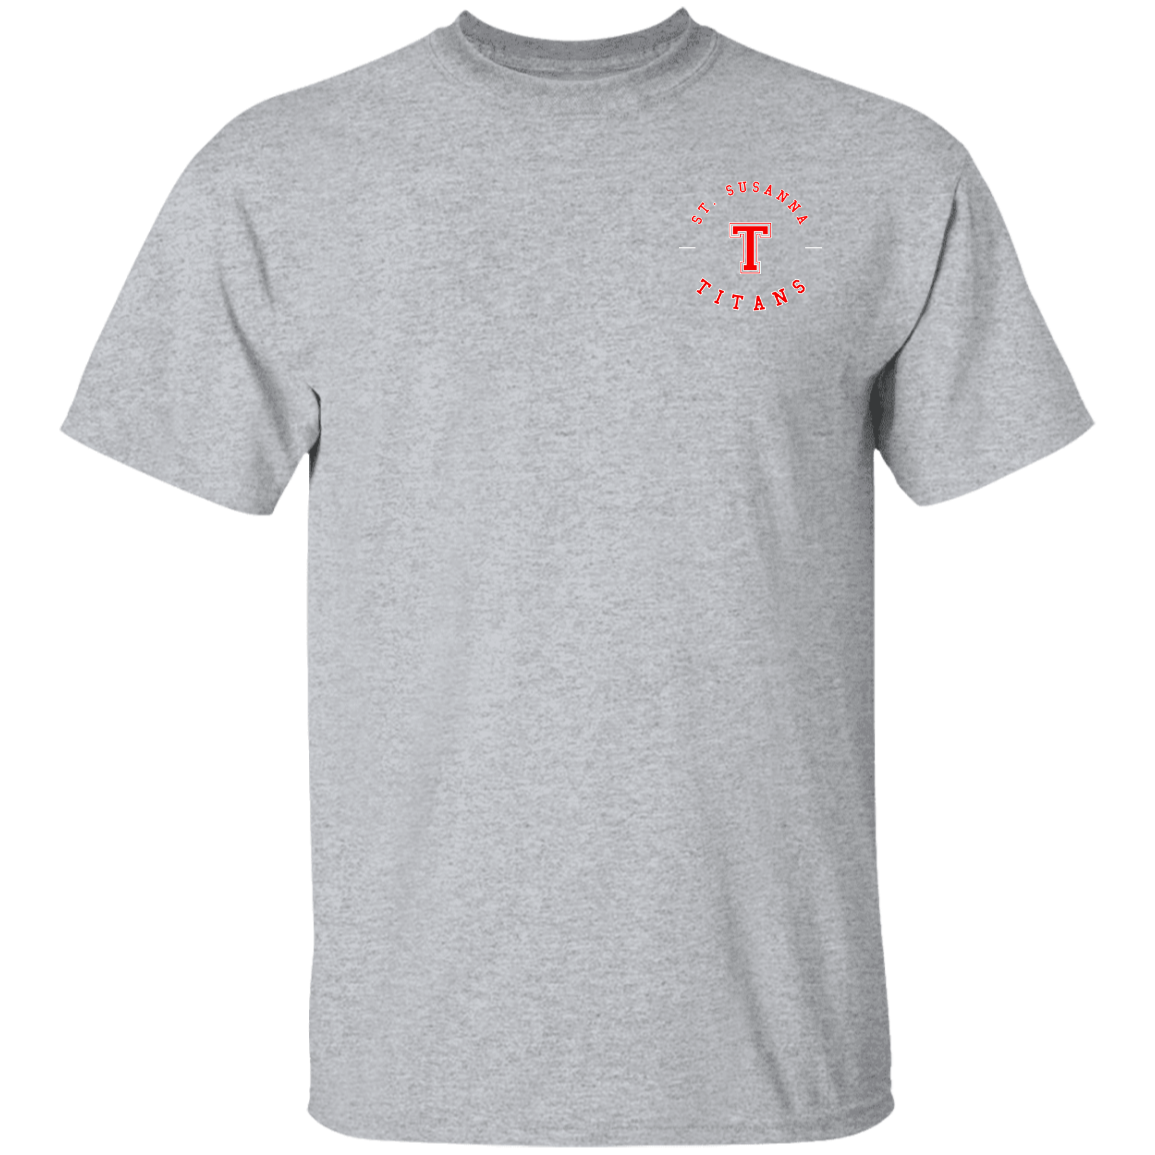 St. Susanna Titans Circular T-Shirt